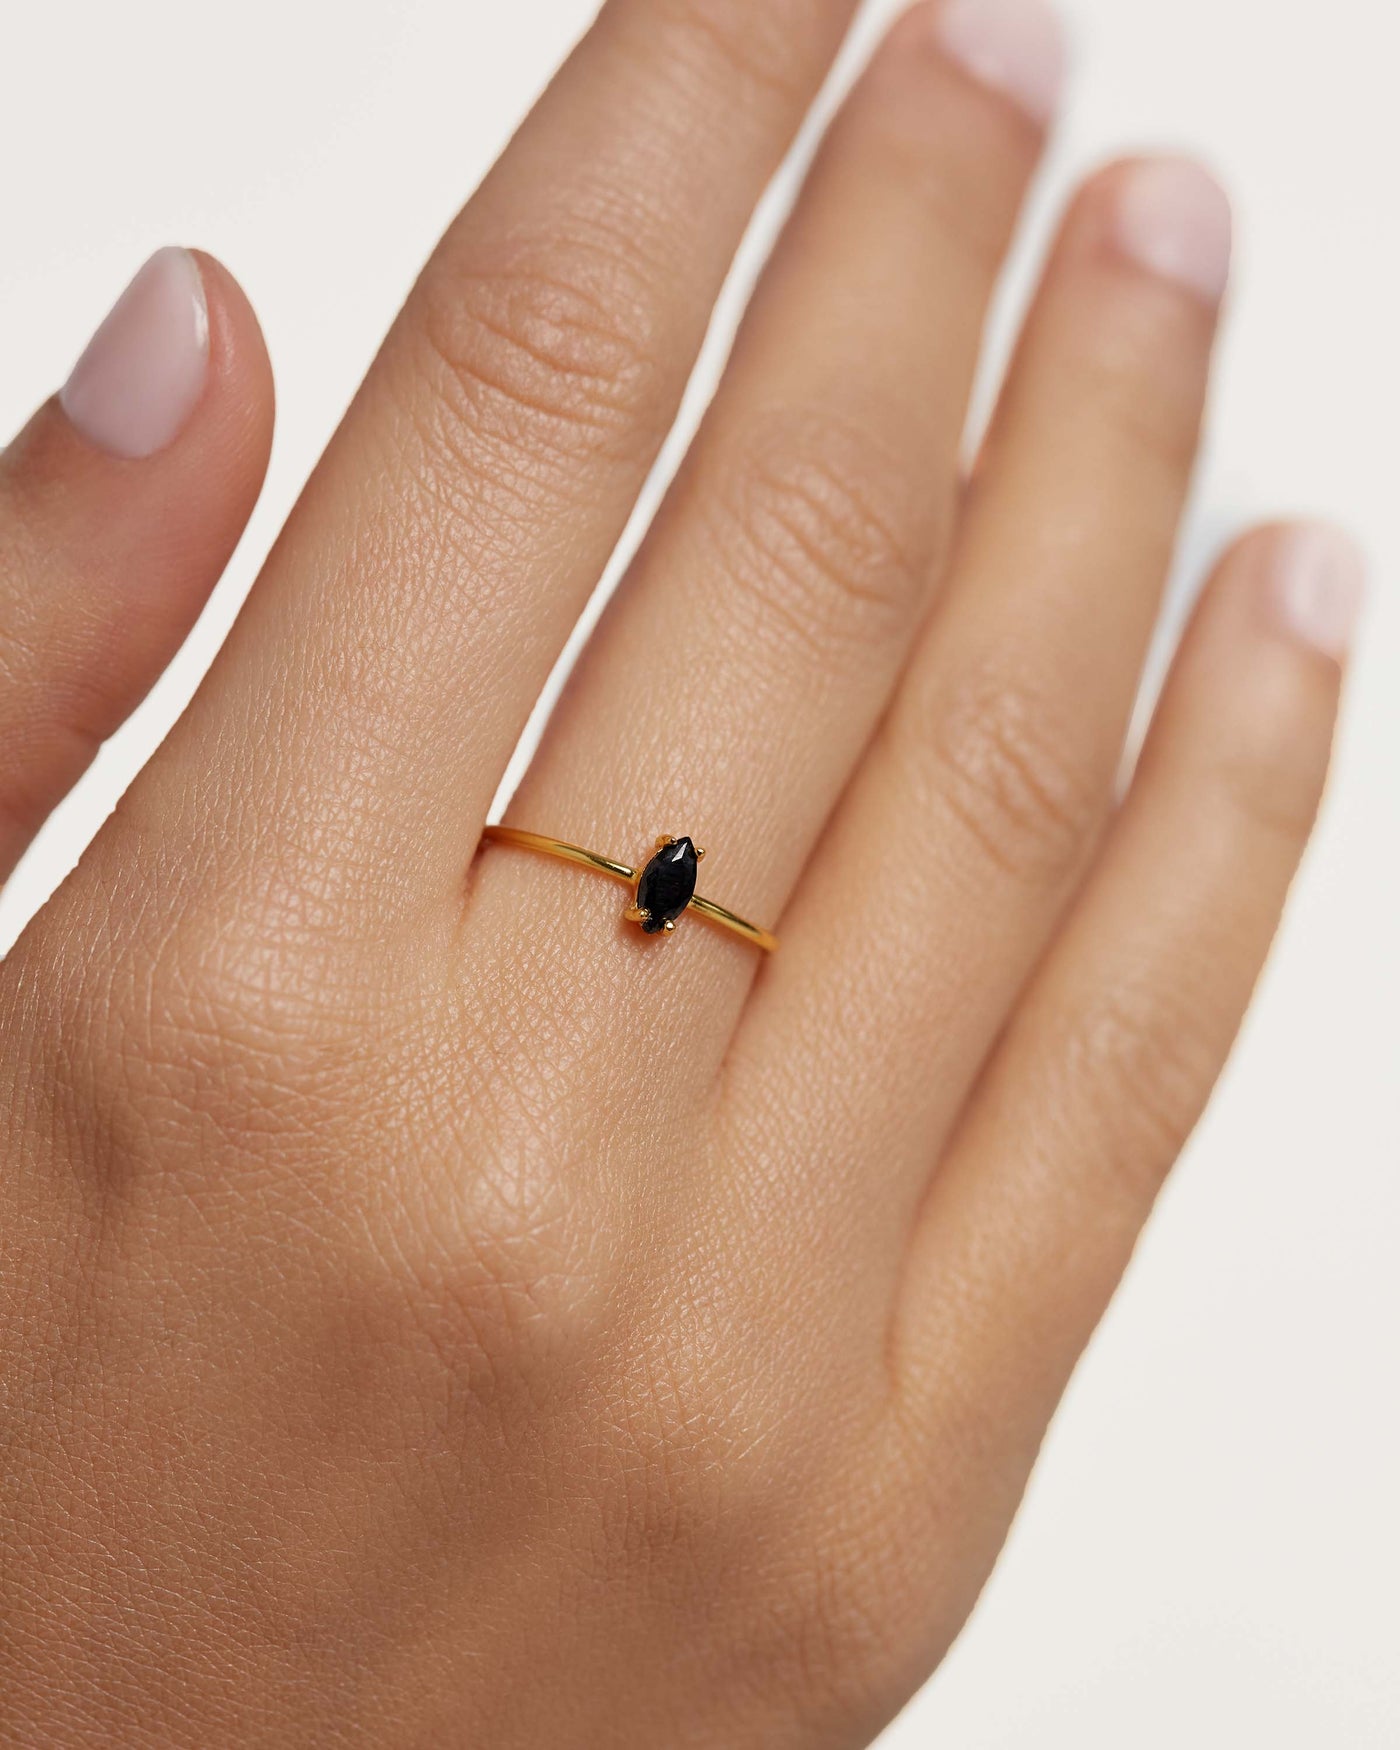 1 Gram Gold Plated Indian Flag On Black Stone Best Quality Ring For Men -  Style B331 at Rs 1670.00 | सोने का पानी चढ़ी हुई अंगूठी - Soni Fashion,  Rajkot | ID: 2851229538755